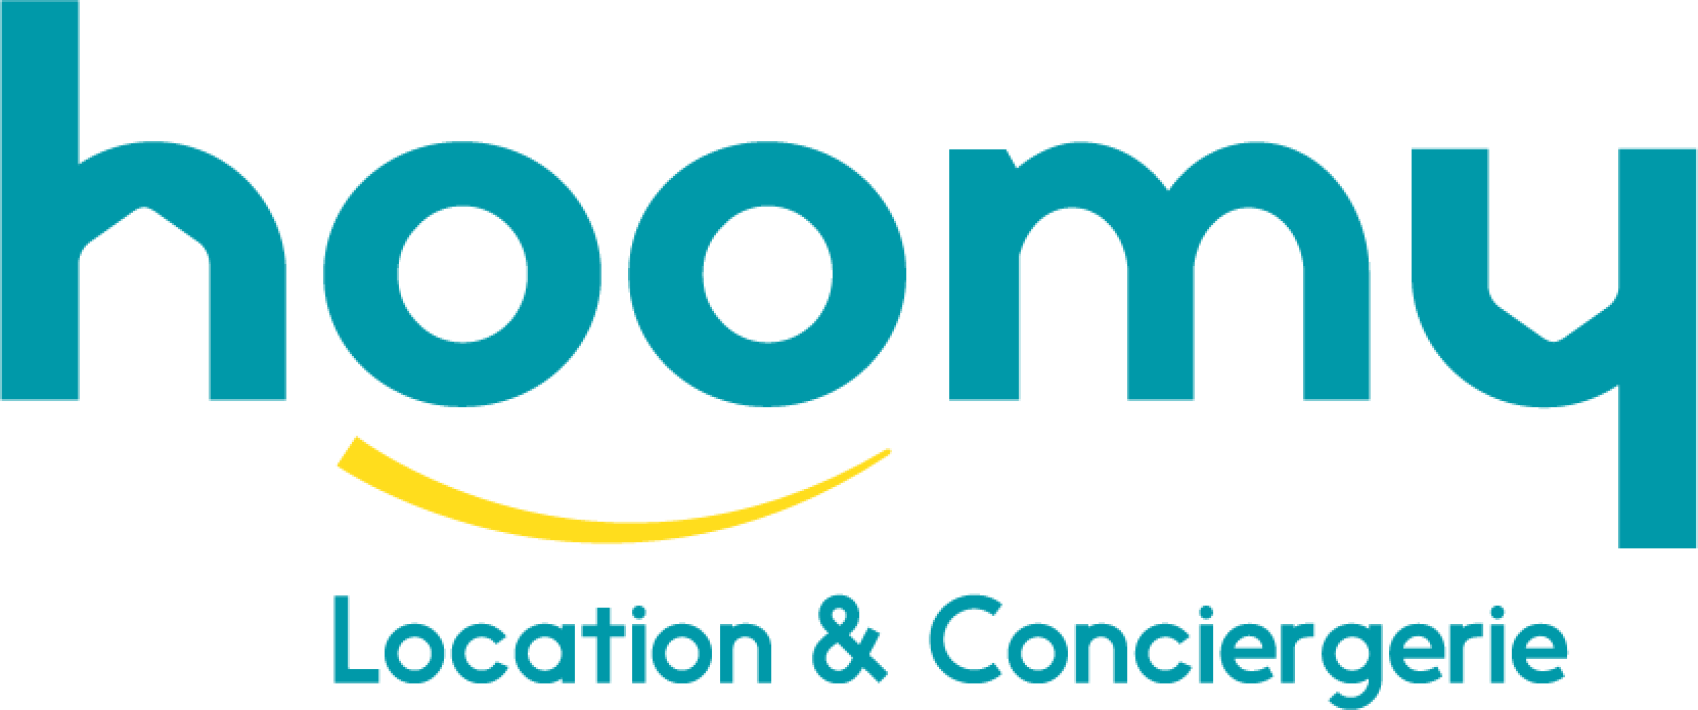 hoomy-logo-location-conciergerie-bleu-4803440